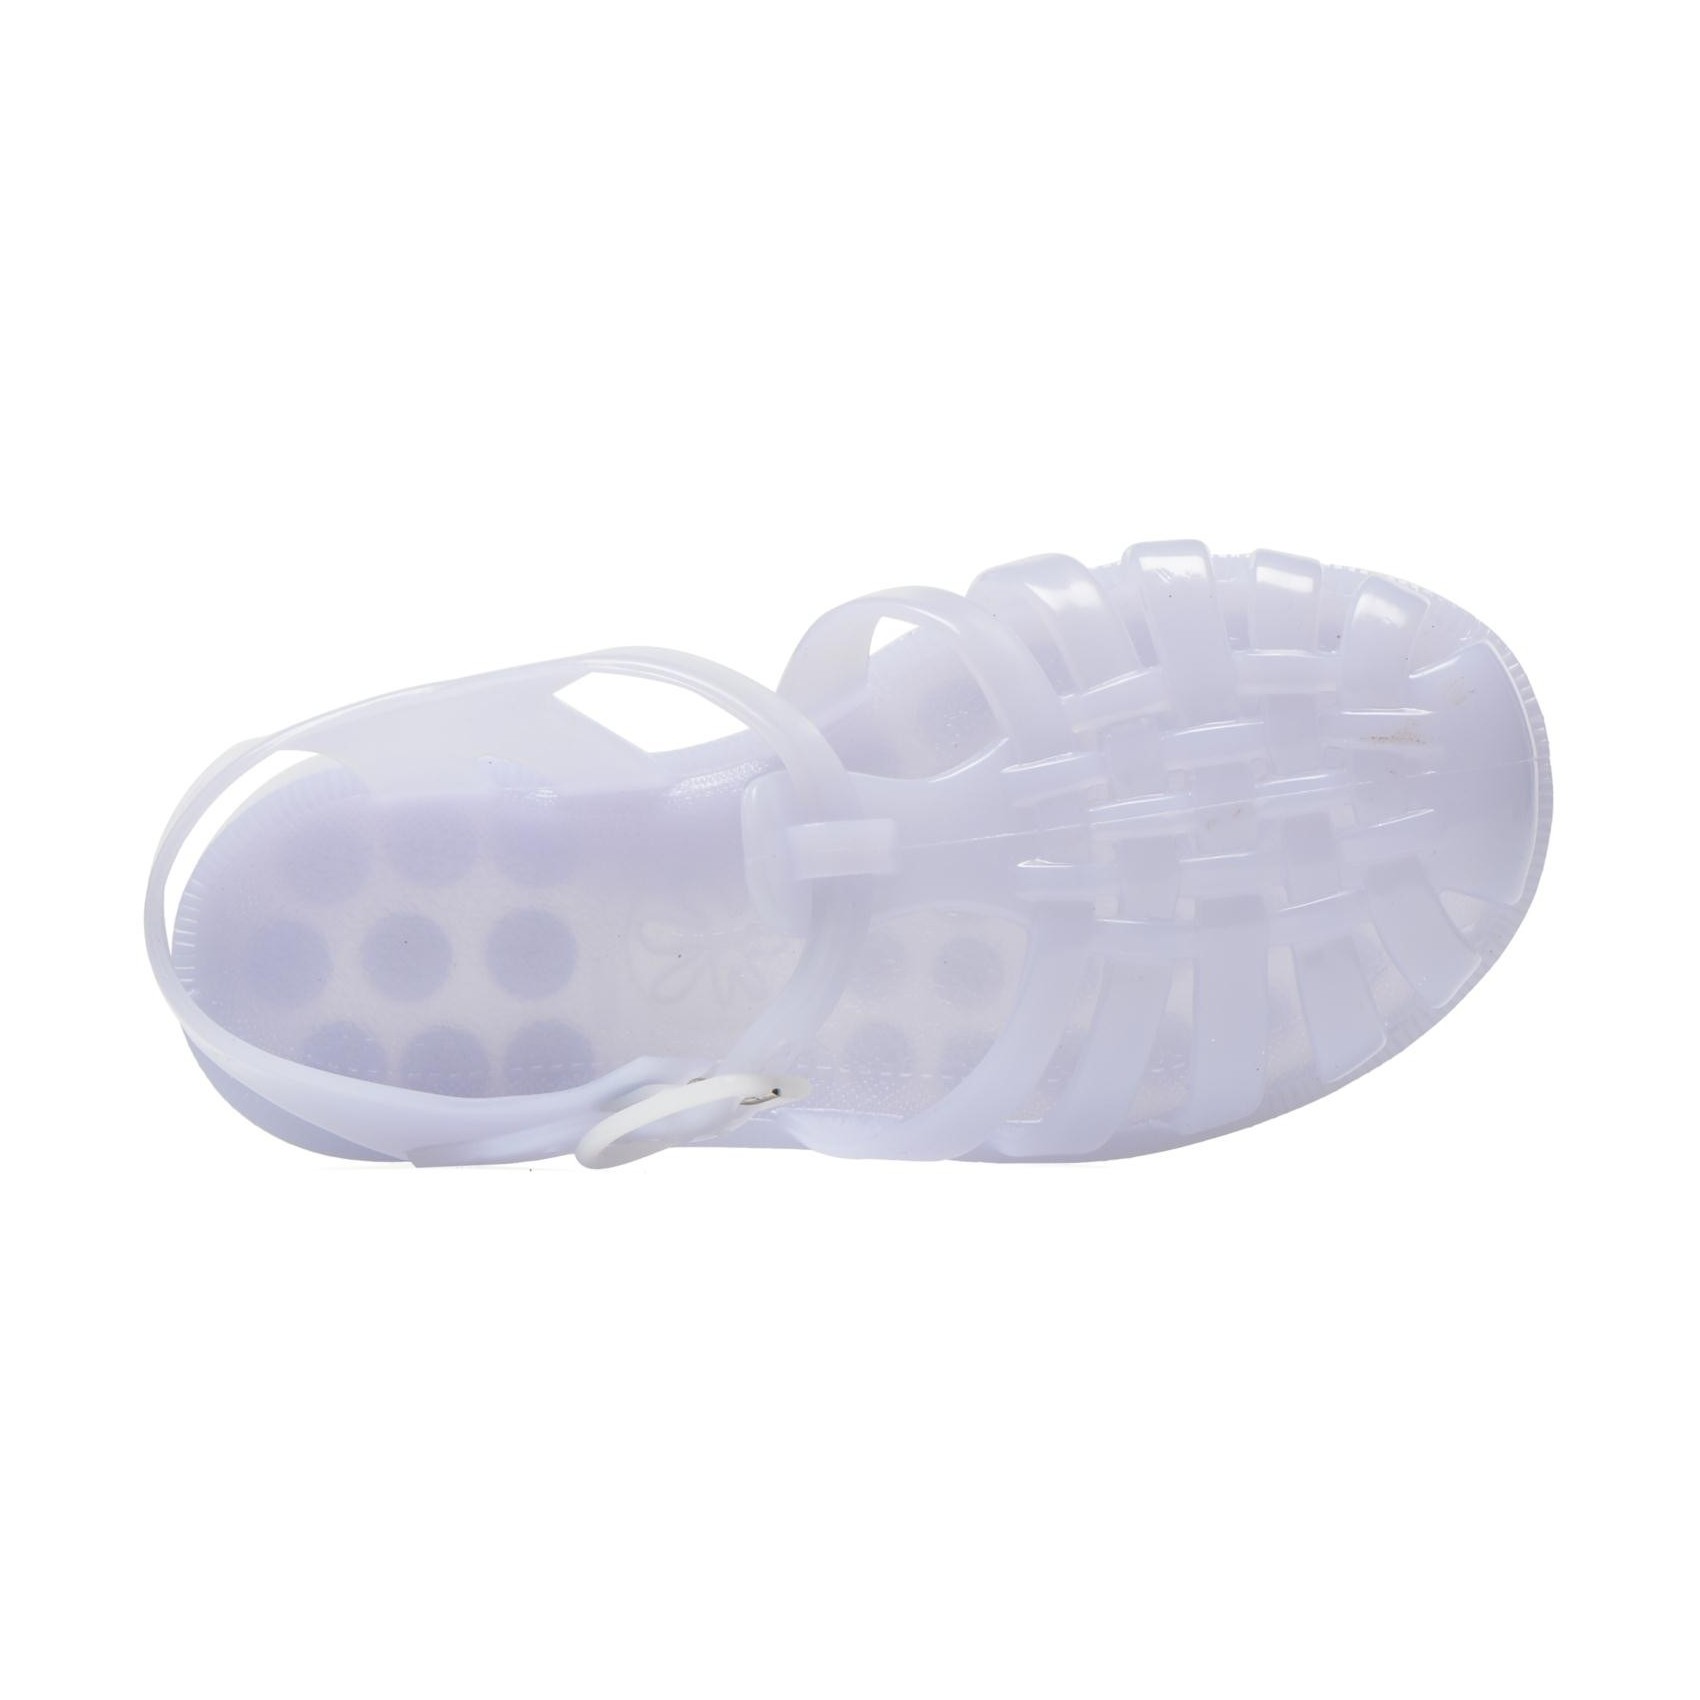 Translucide Plastic sandals Méduse from Princesse Ilou